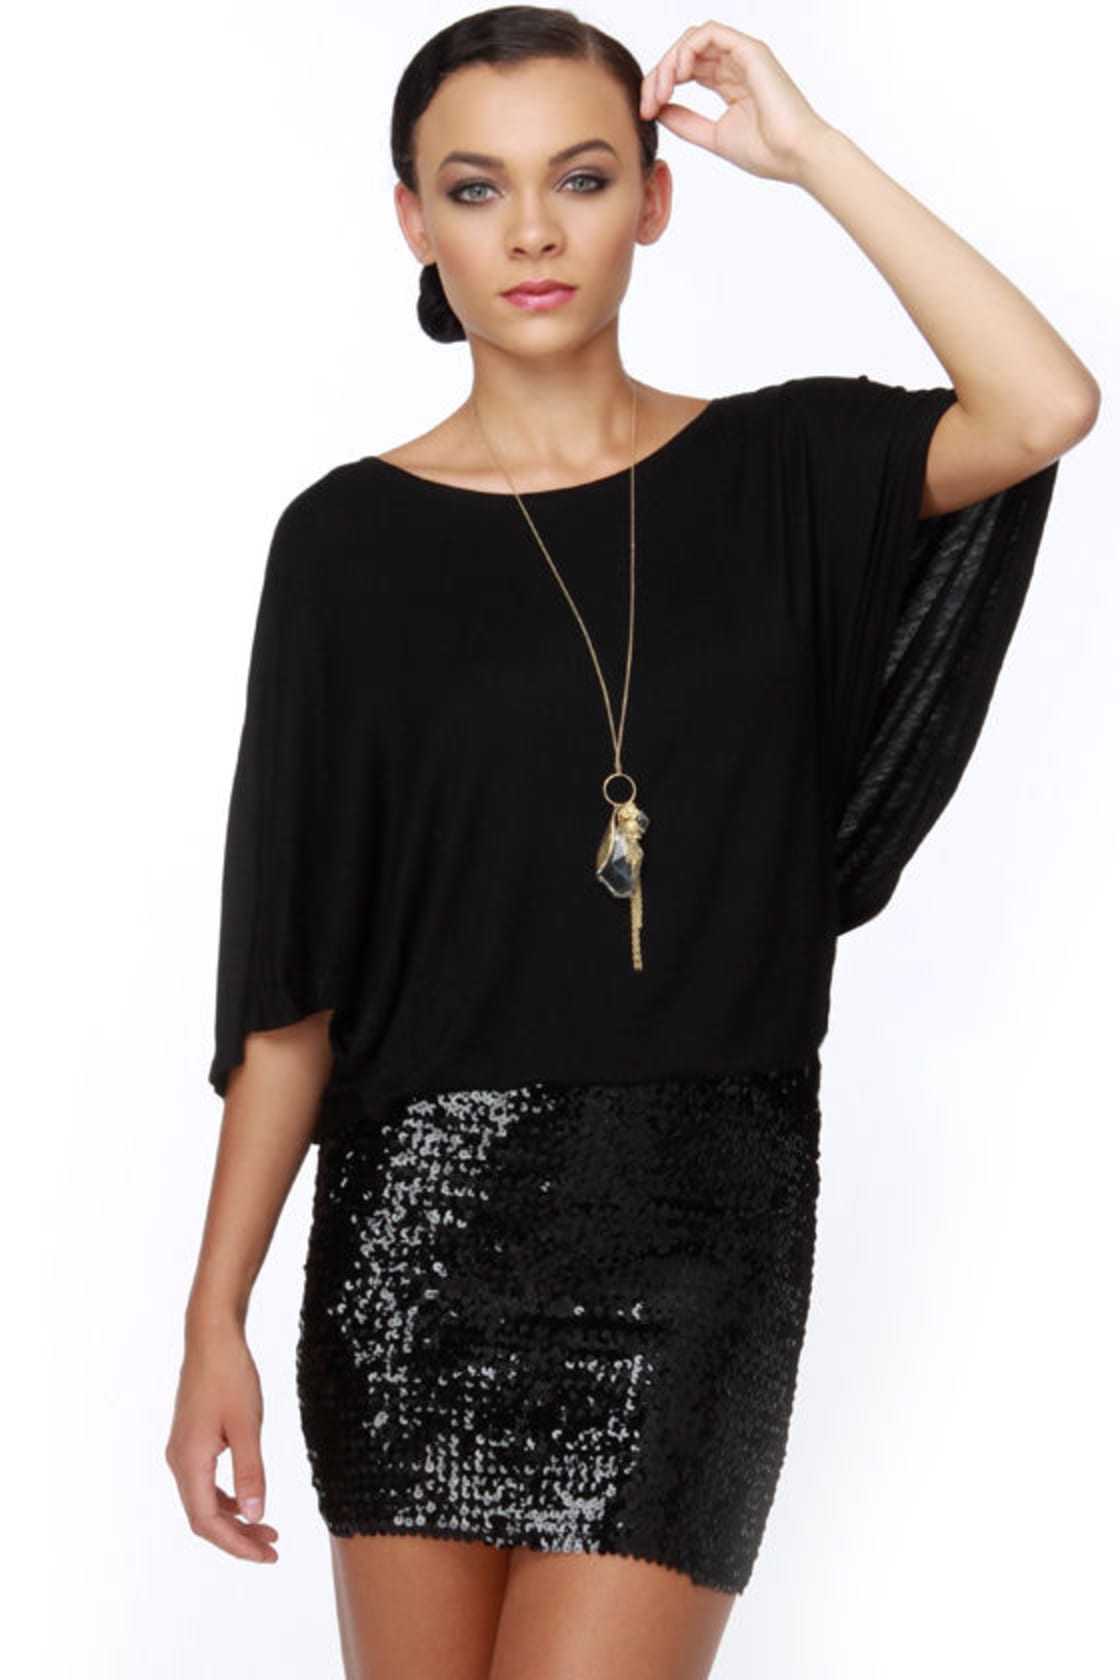 Hot Sequin Dress - Black Dress - Party Dress - $63.00 - Lulus